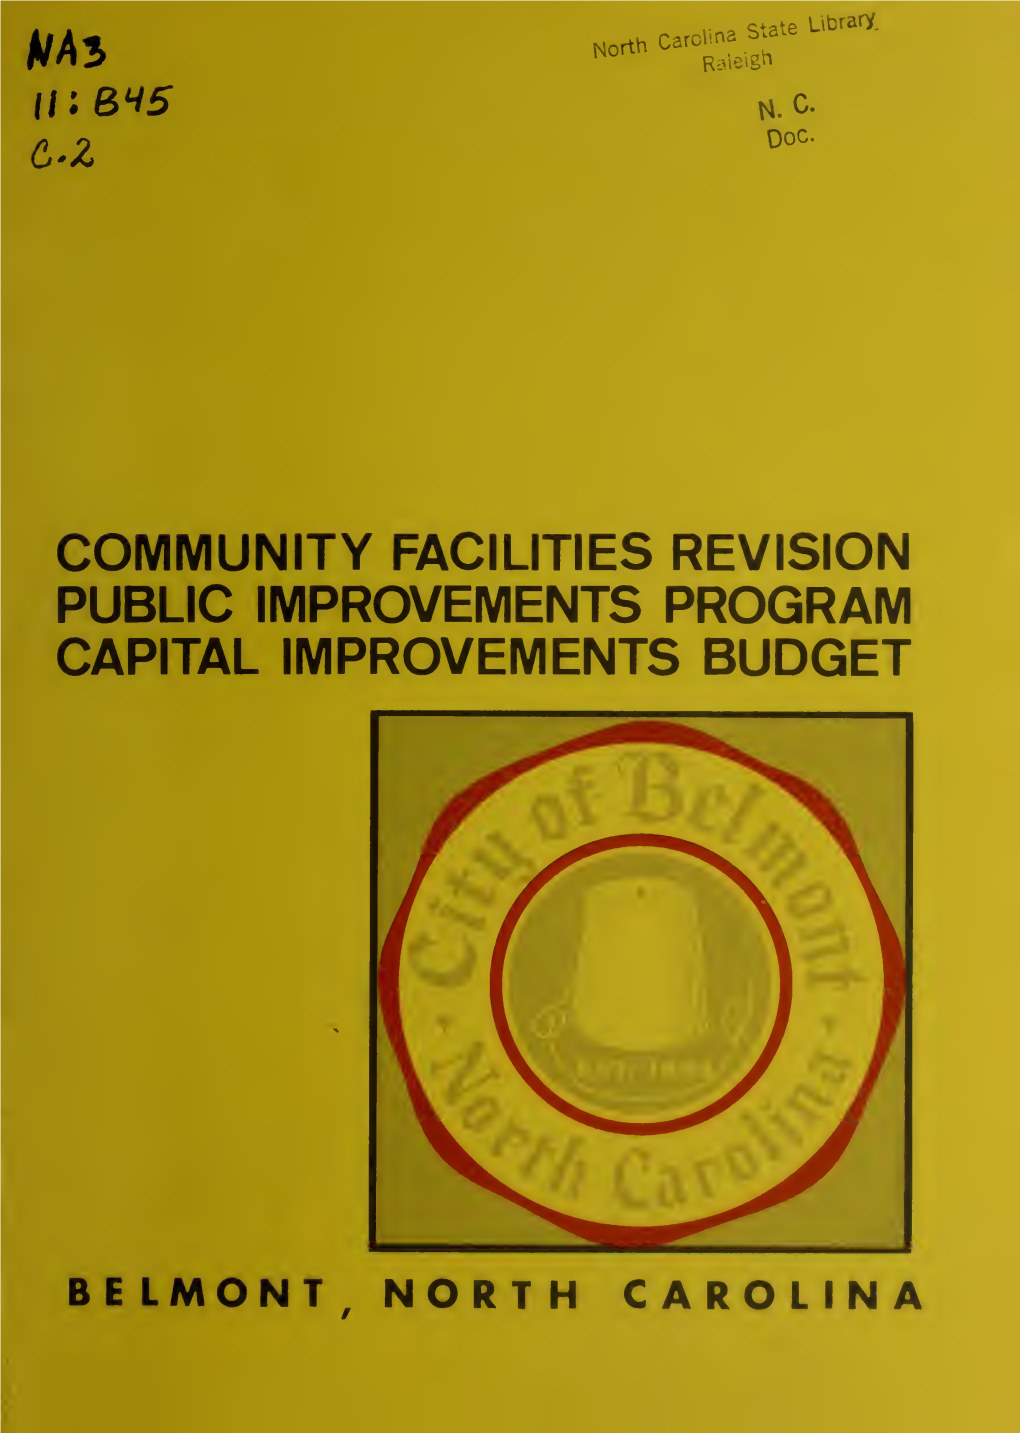 Community Facilities Revision, Public Improvements Program, and Capital Improvements Budget for Belmont, North Carolina